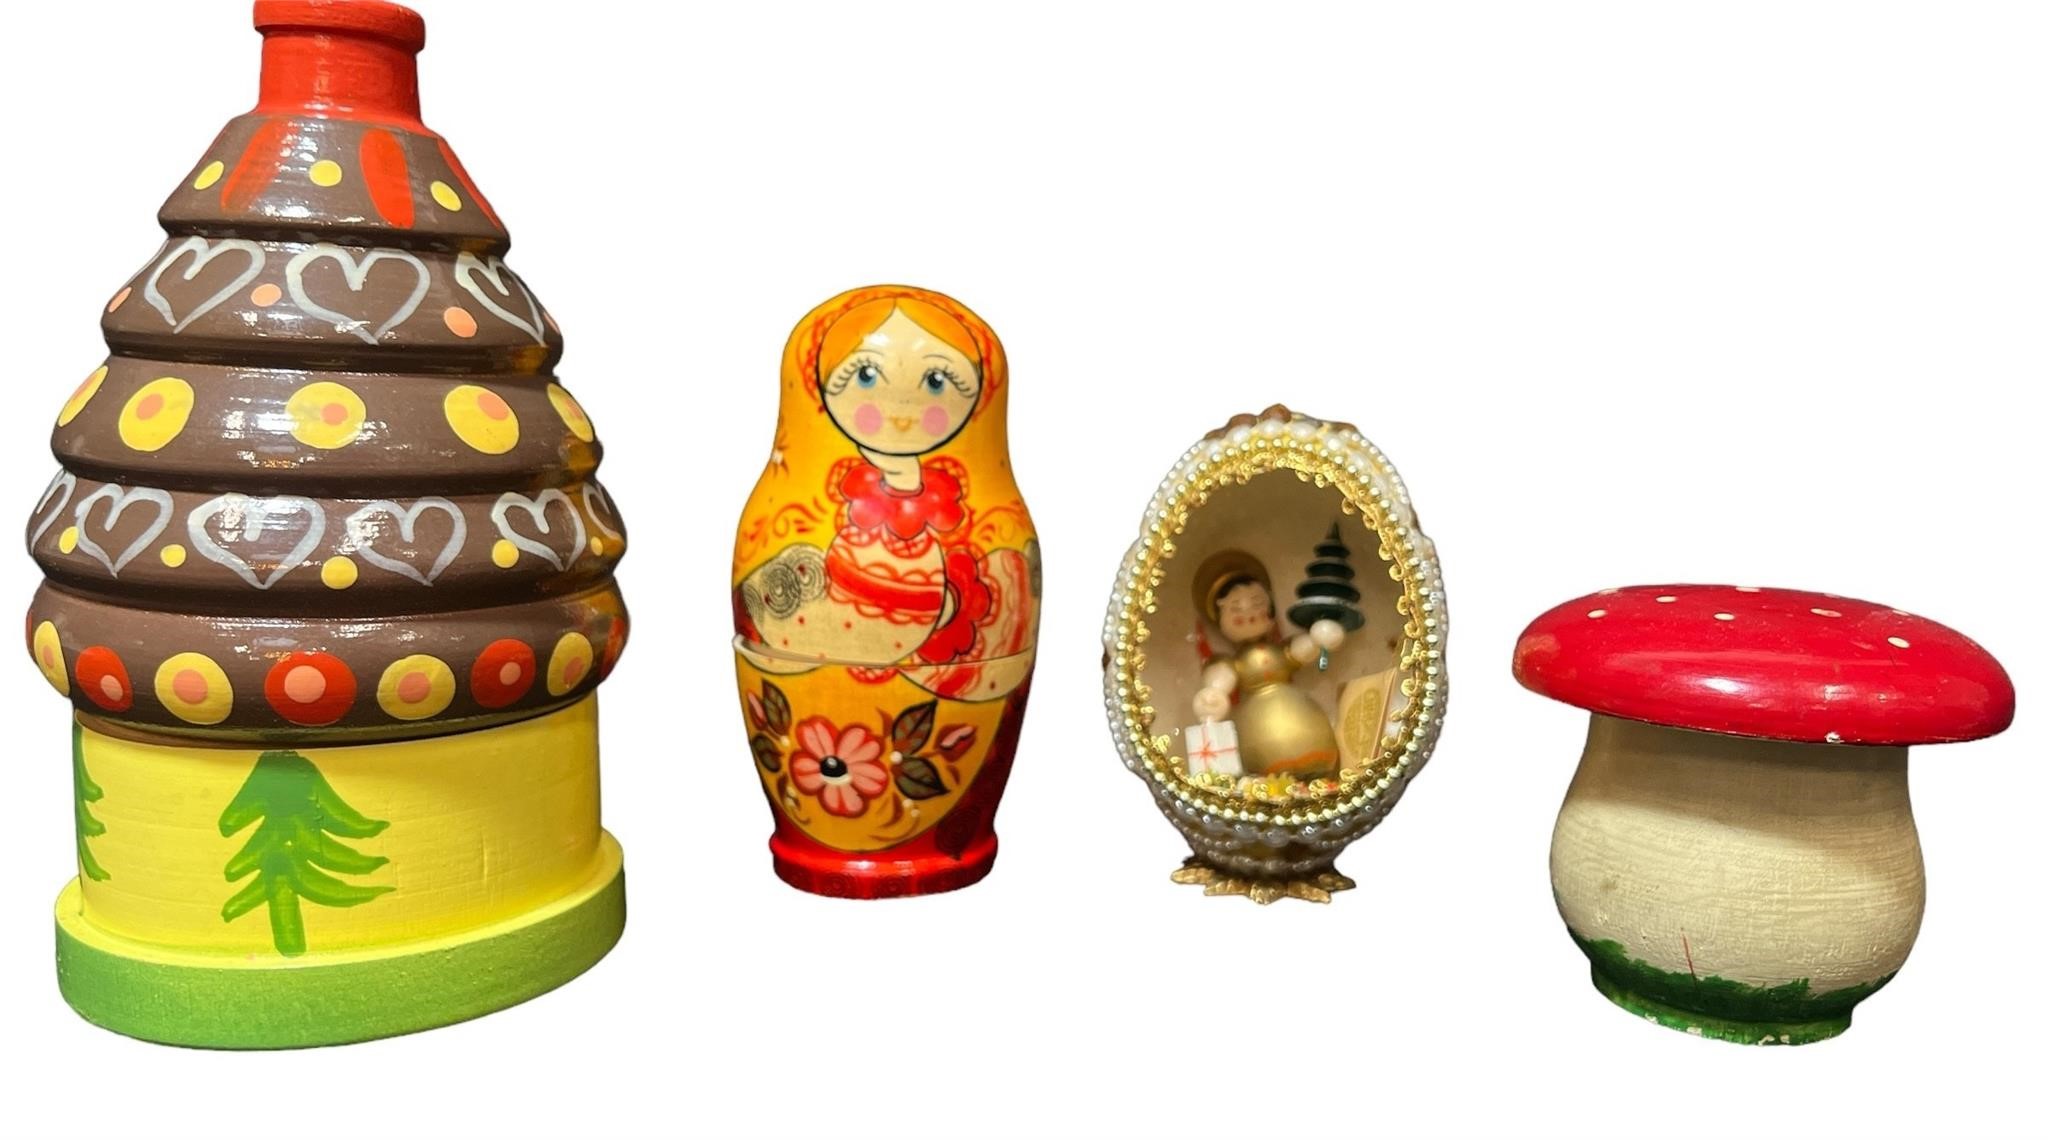 Russian, Polish Nesting Dolls, Decorated Egg